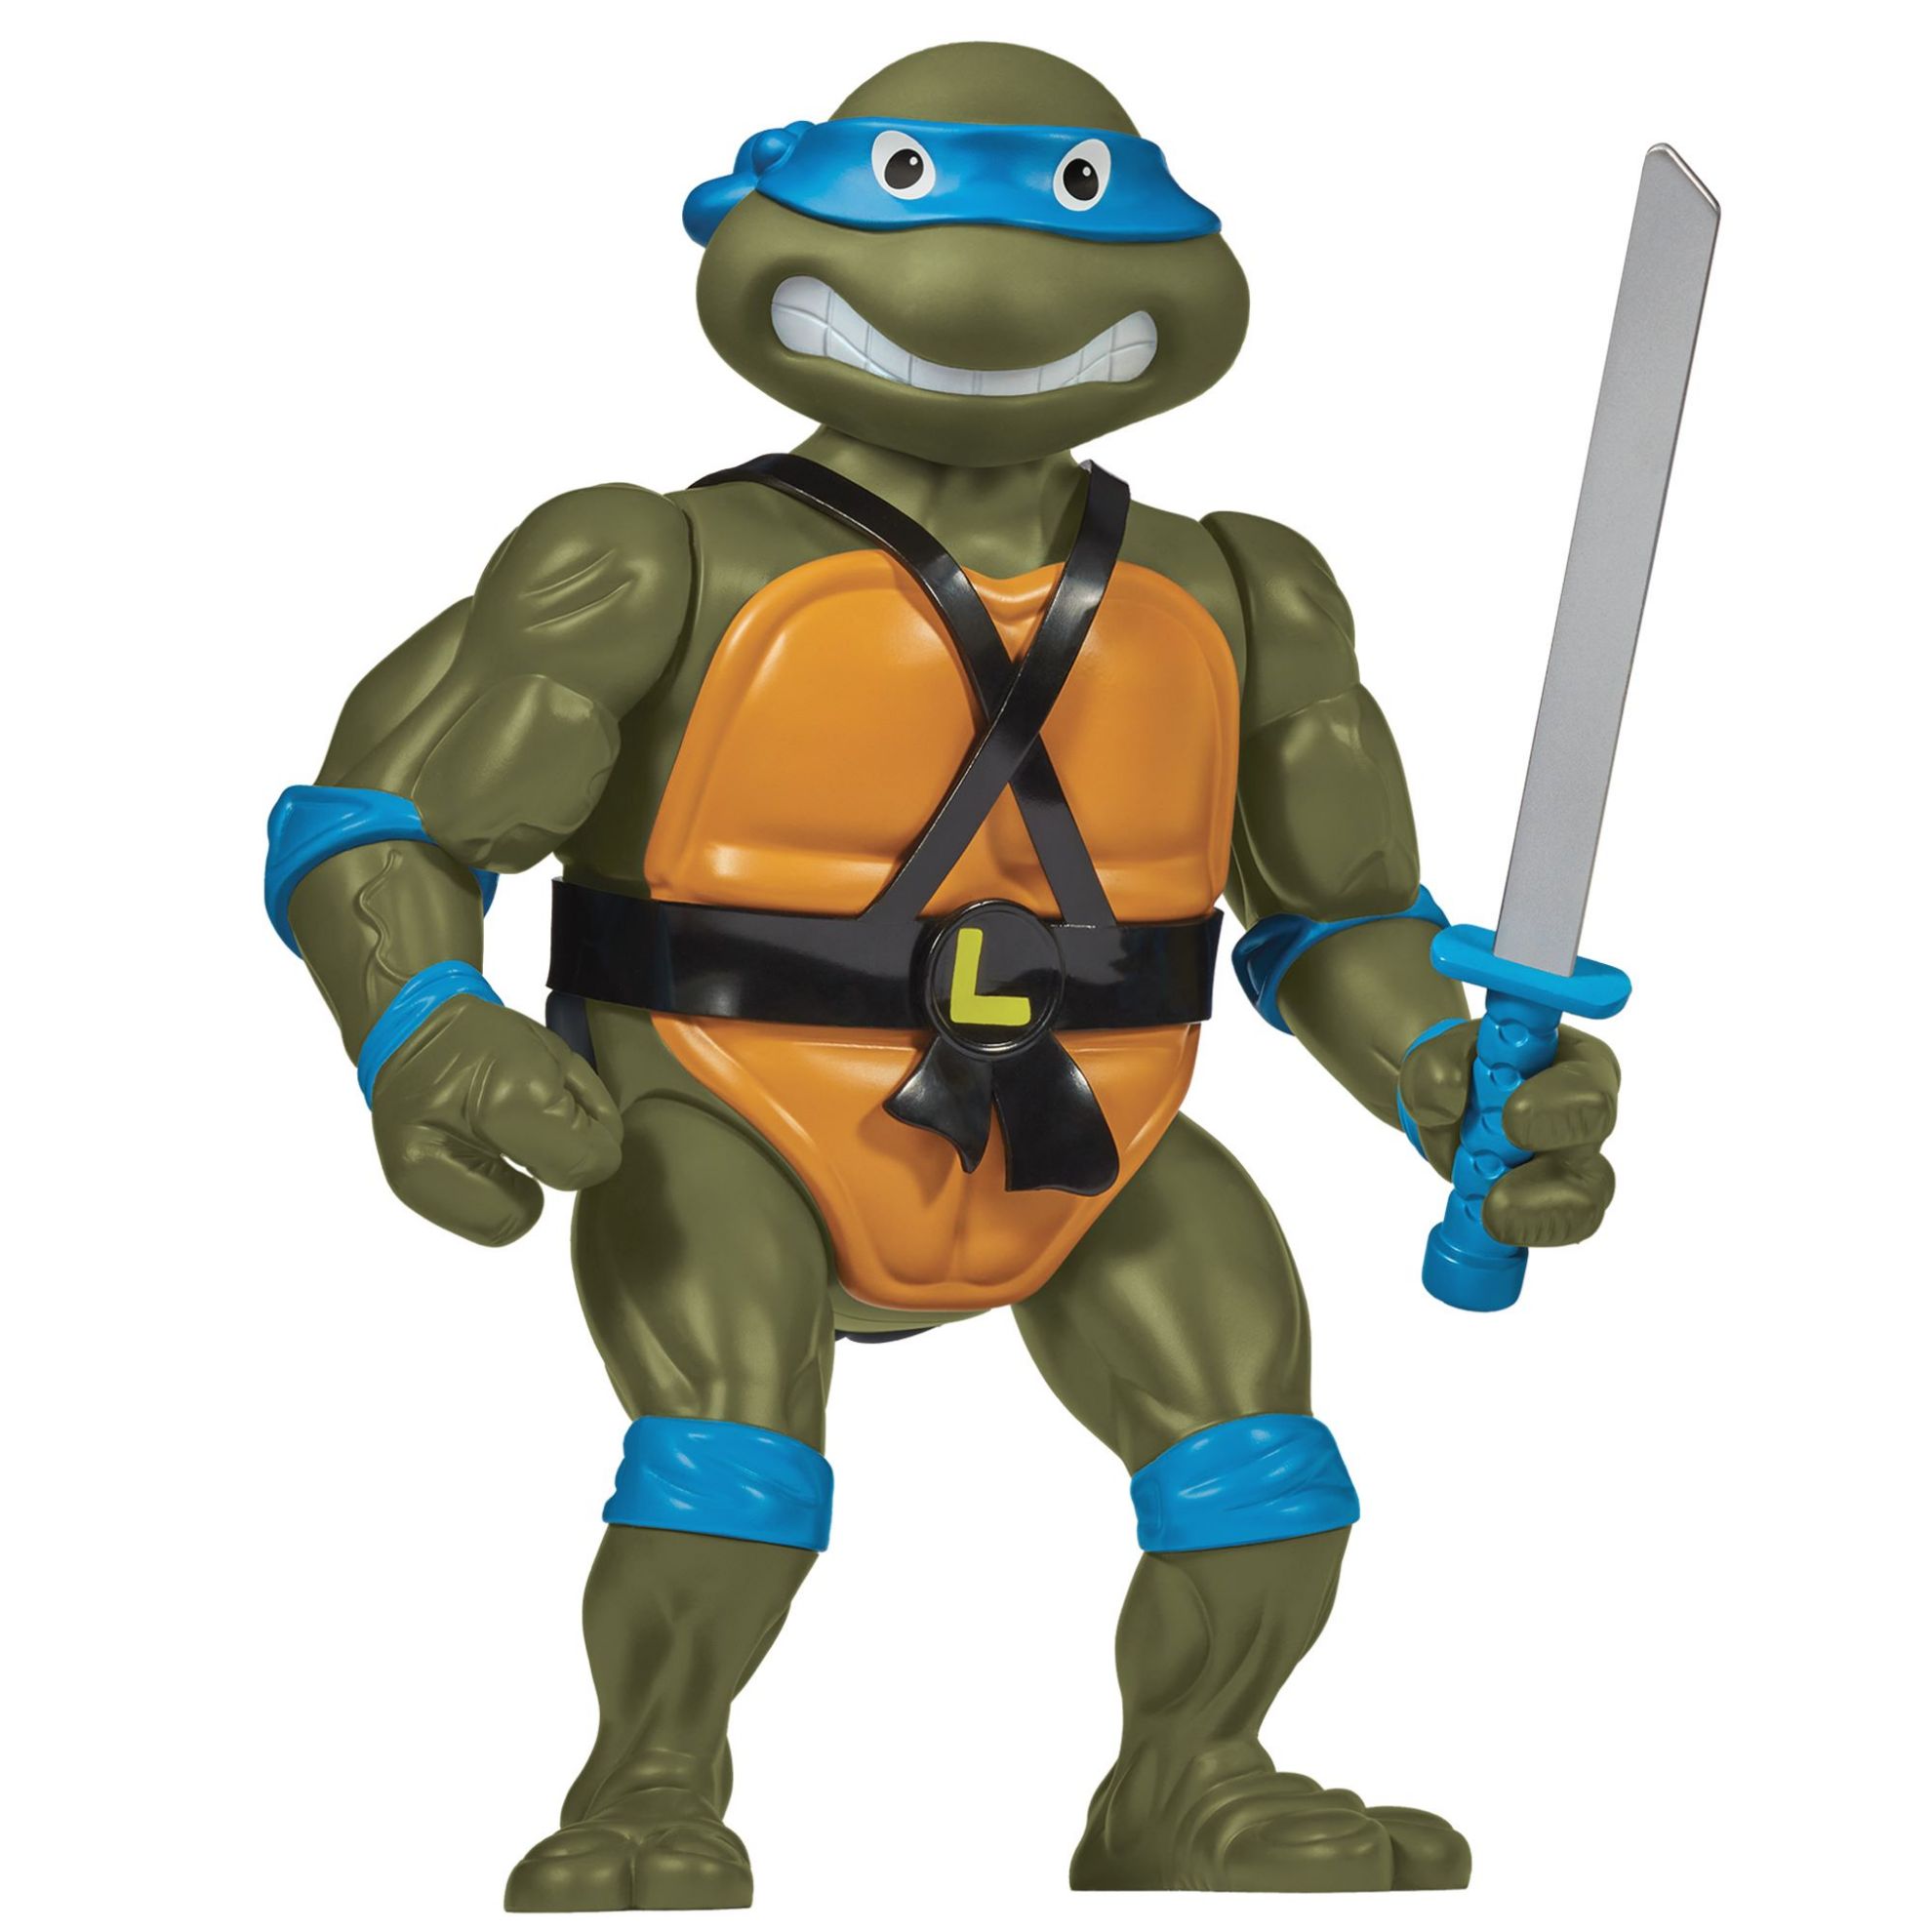 https://www.character-online.com/images/thumbs/0018620_teenage-mutant-ninja-turtles-classic-giant-leonardo.jpeg